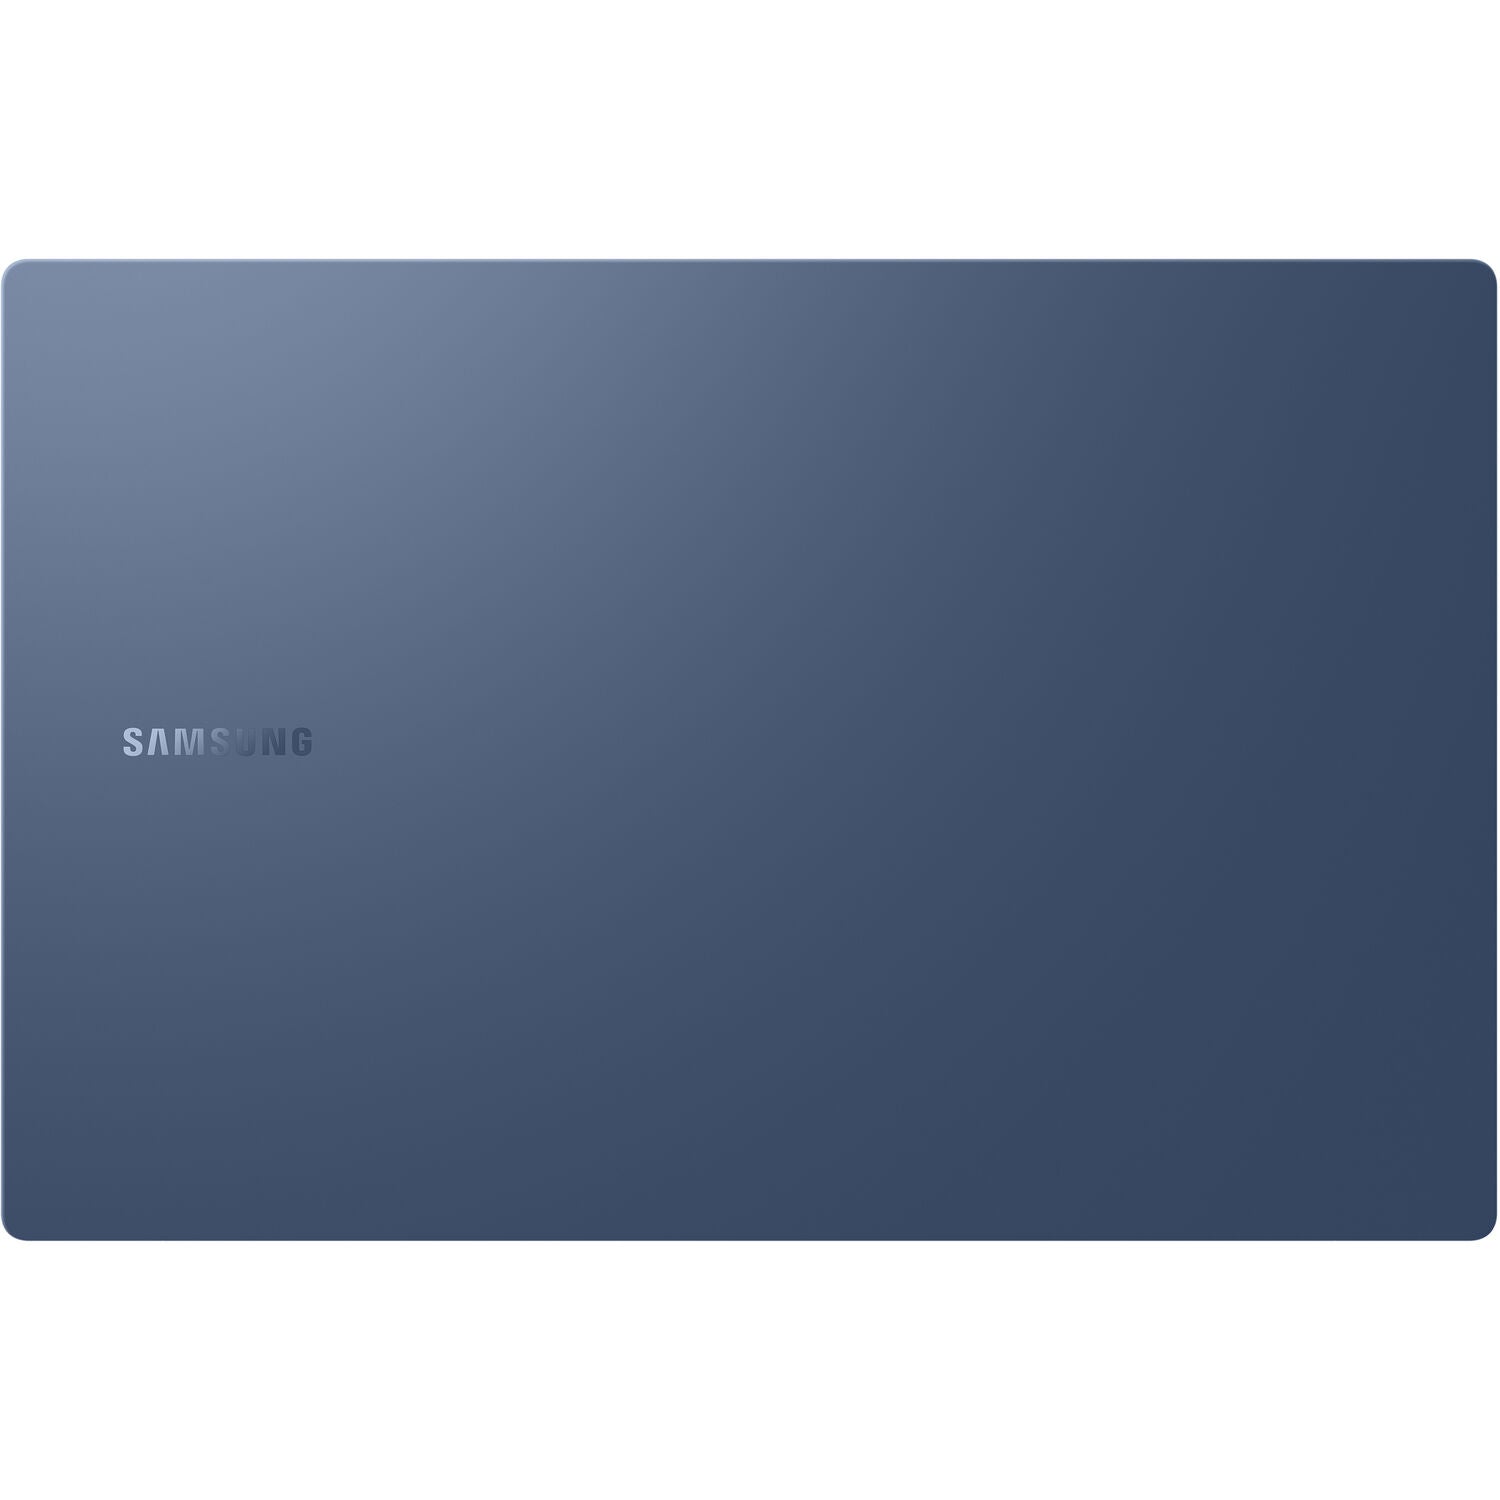 Samsung NP930XDB-KF3US Book Pro 13.3" FHD i7-1165G7 8GB 512GB W10H Blue - Certified Refurbished